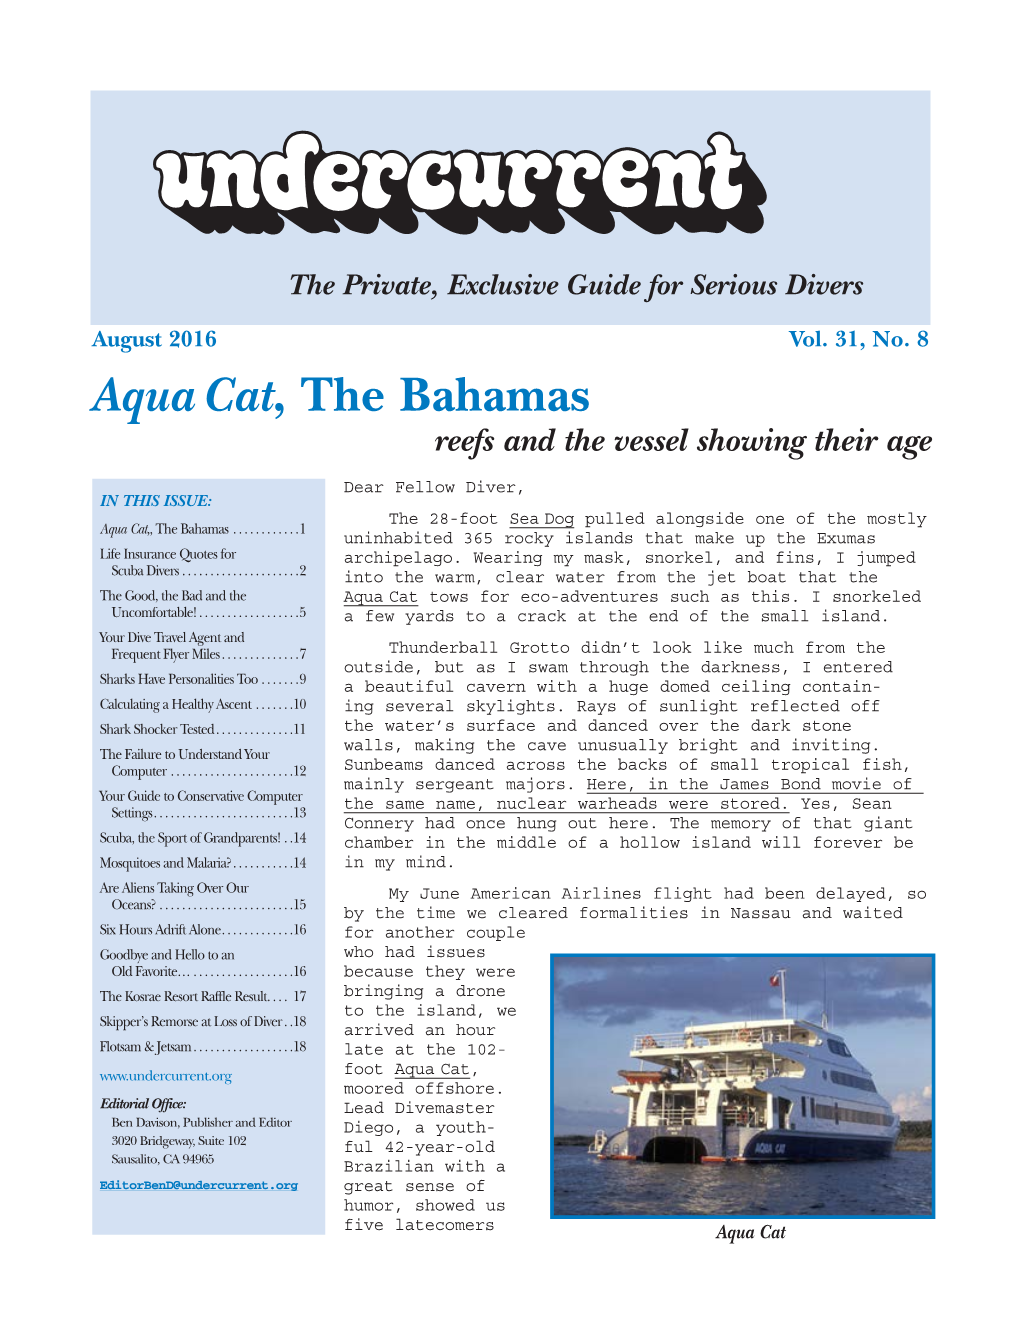 Aqua Cat, the Bahamas [Other Articles] Undercurrent, August, 2016